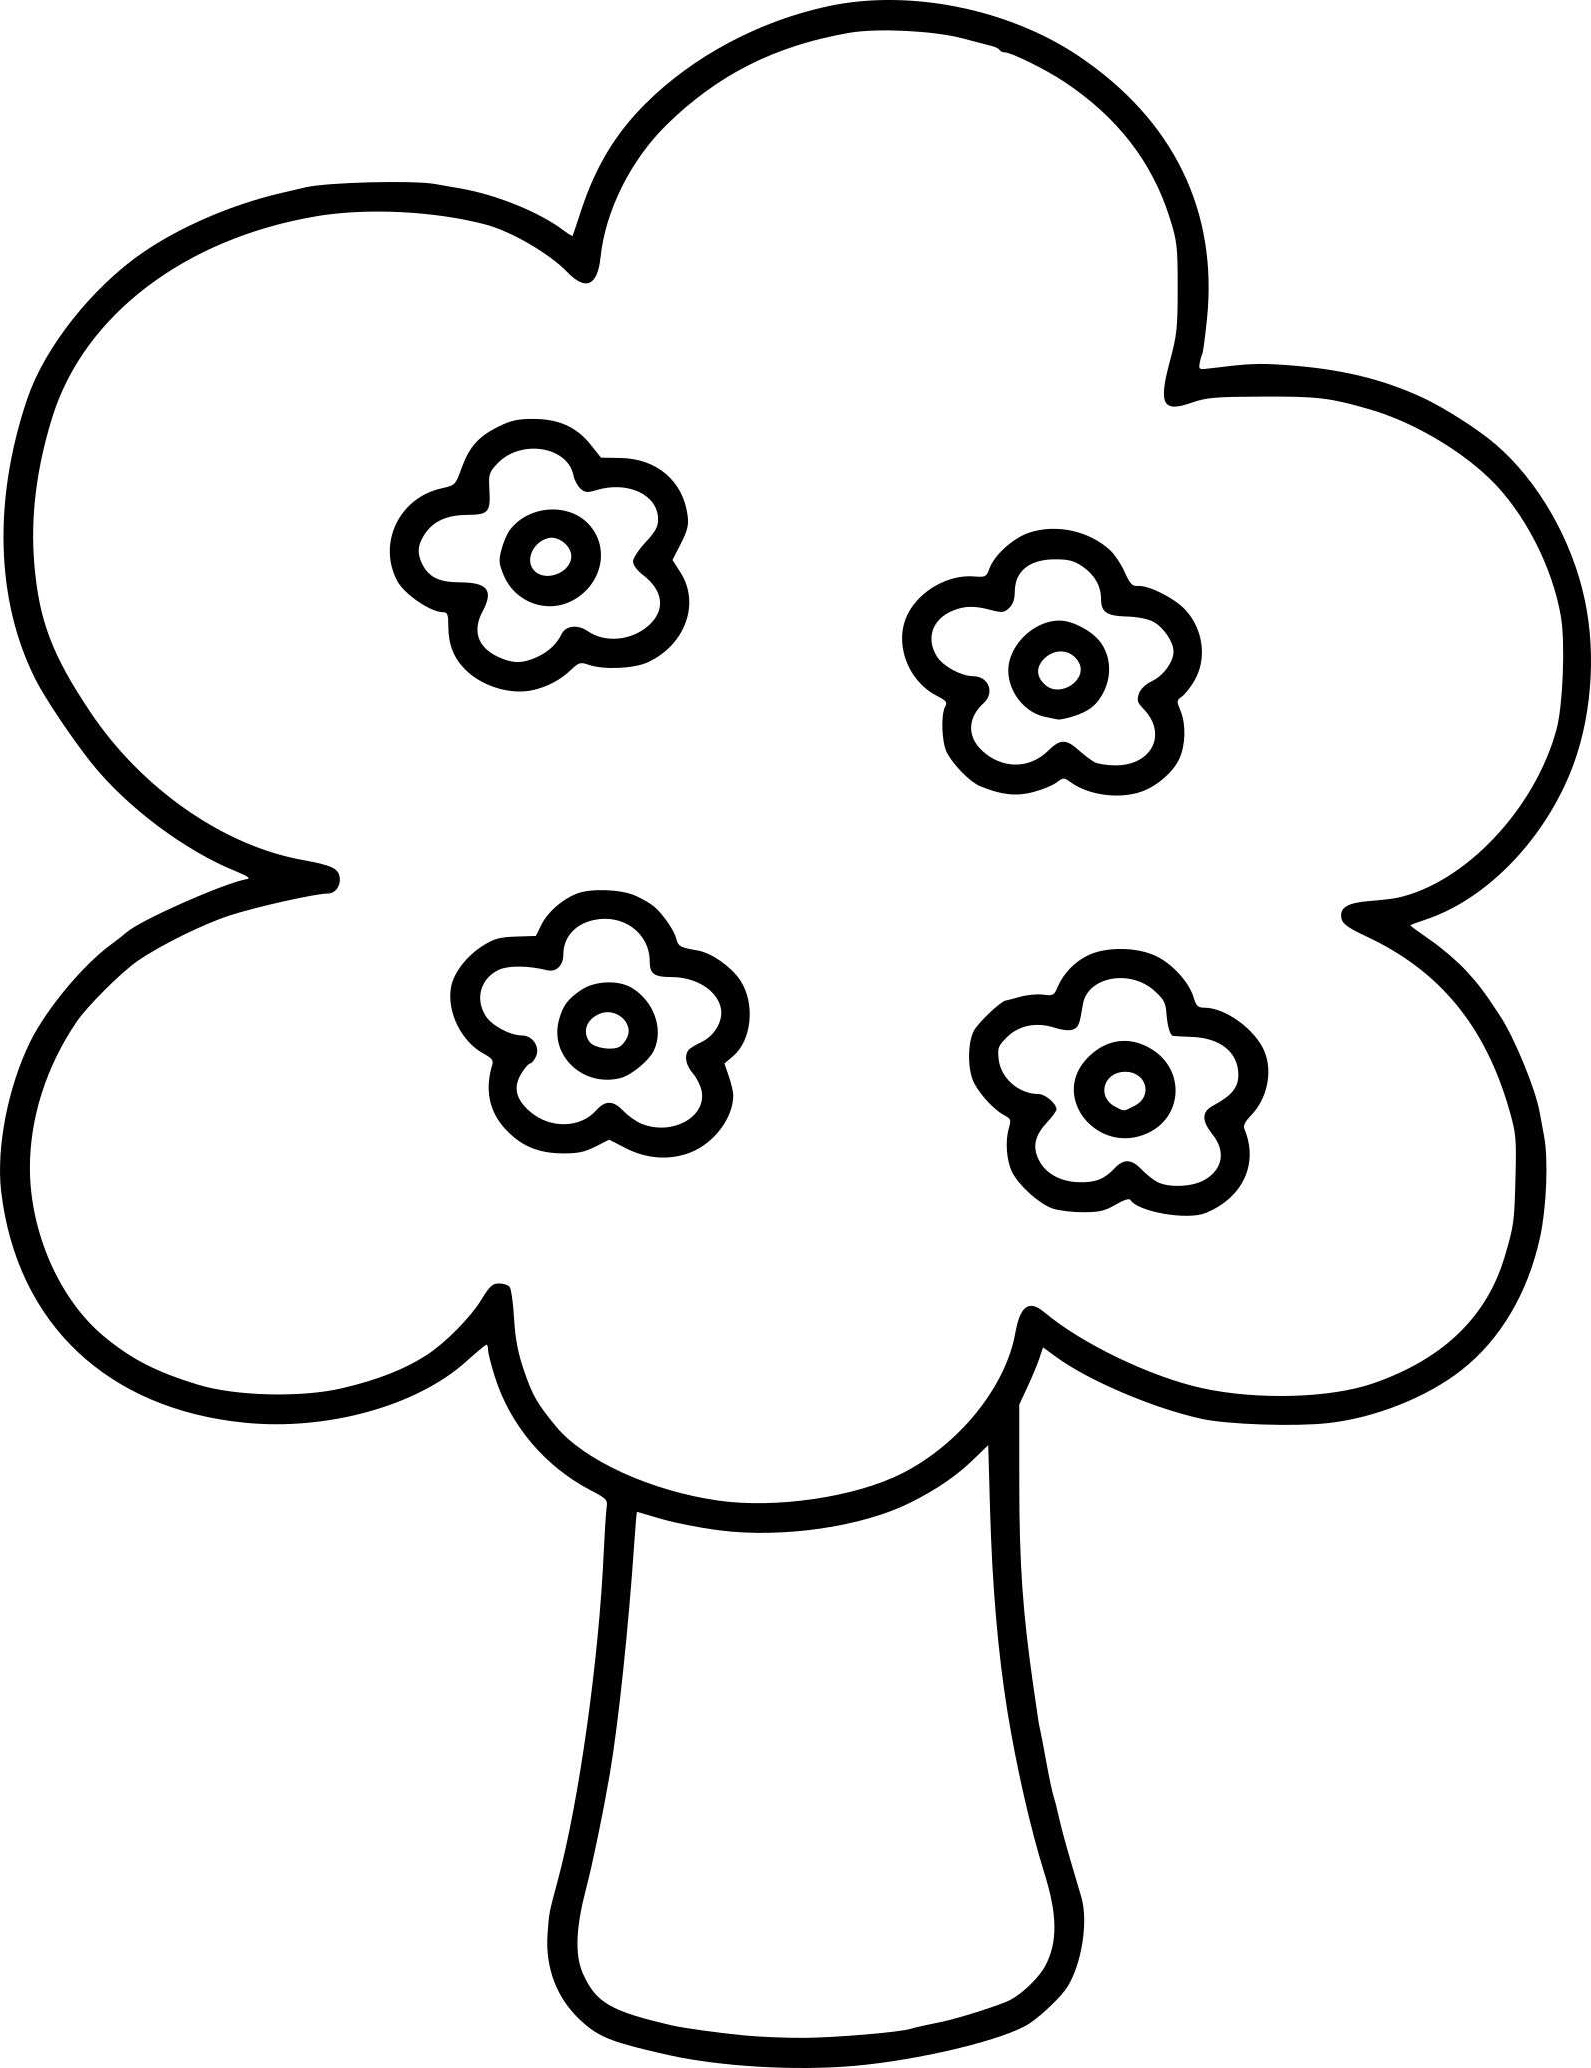 6547 coloriage arbre simple a imprimer 2128 fleur facile simple coloriage dessin